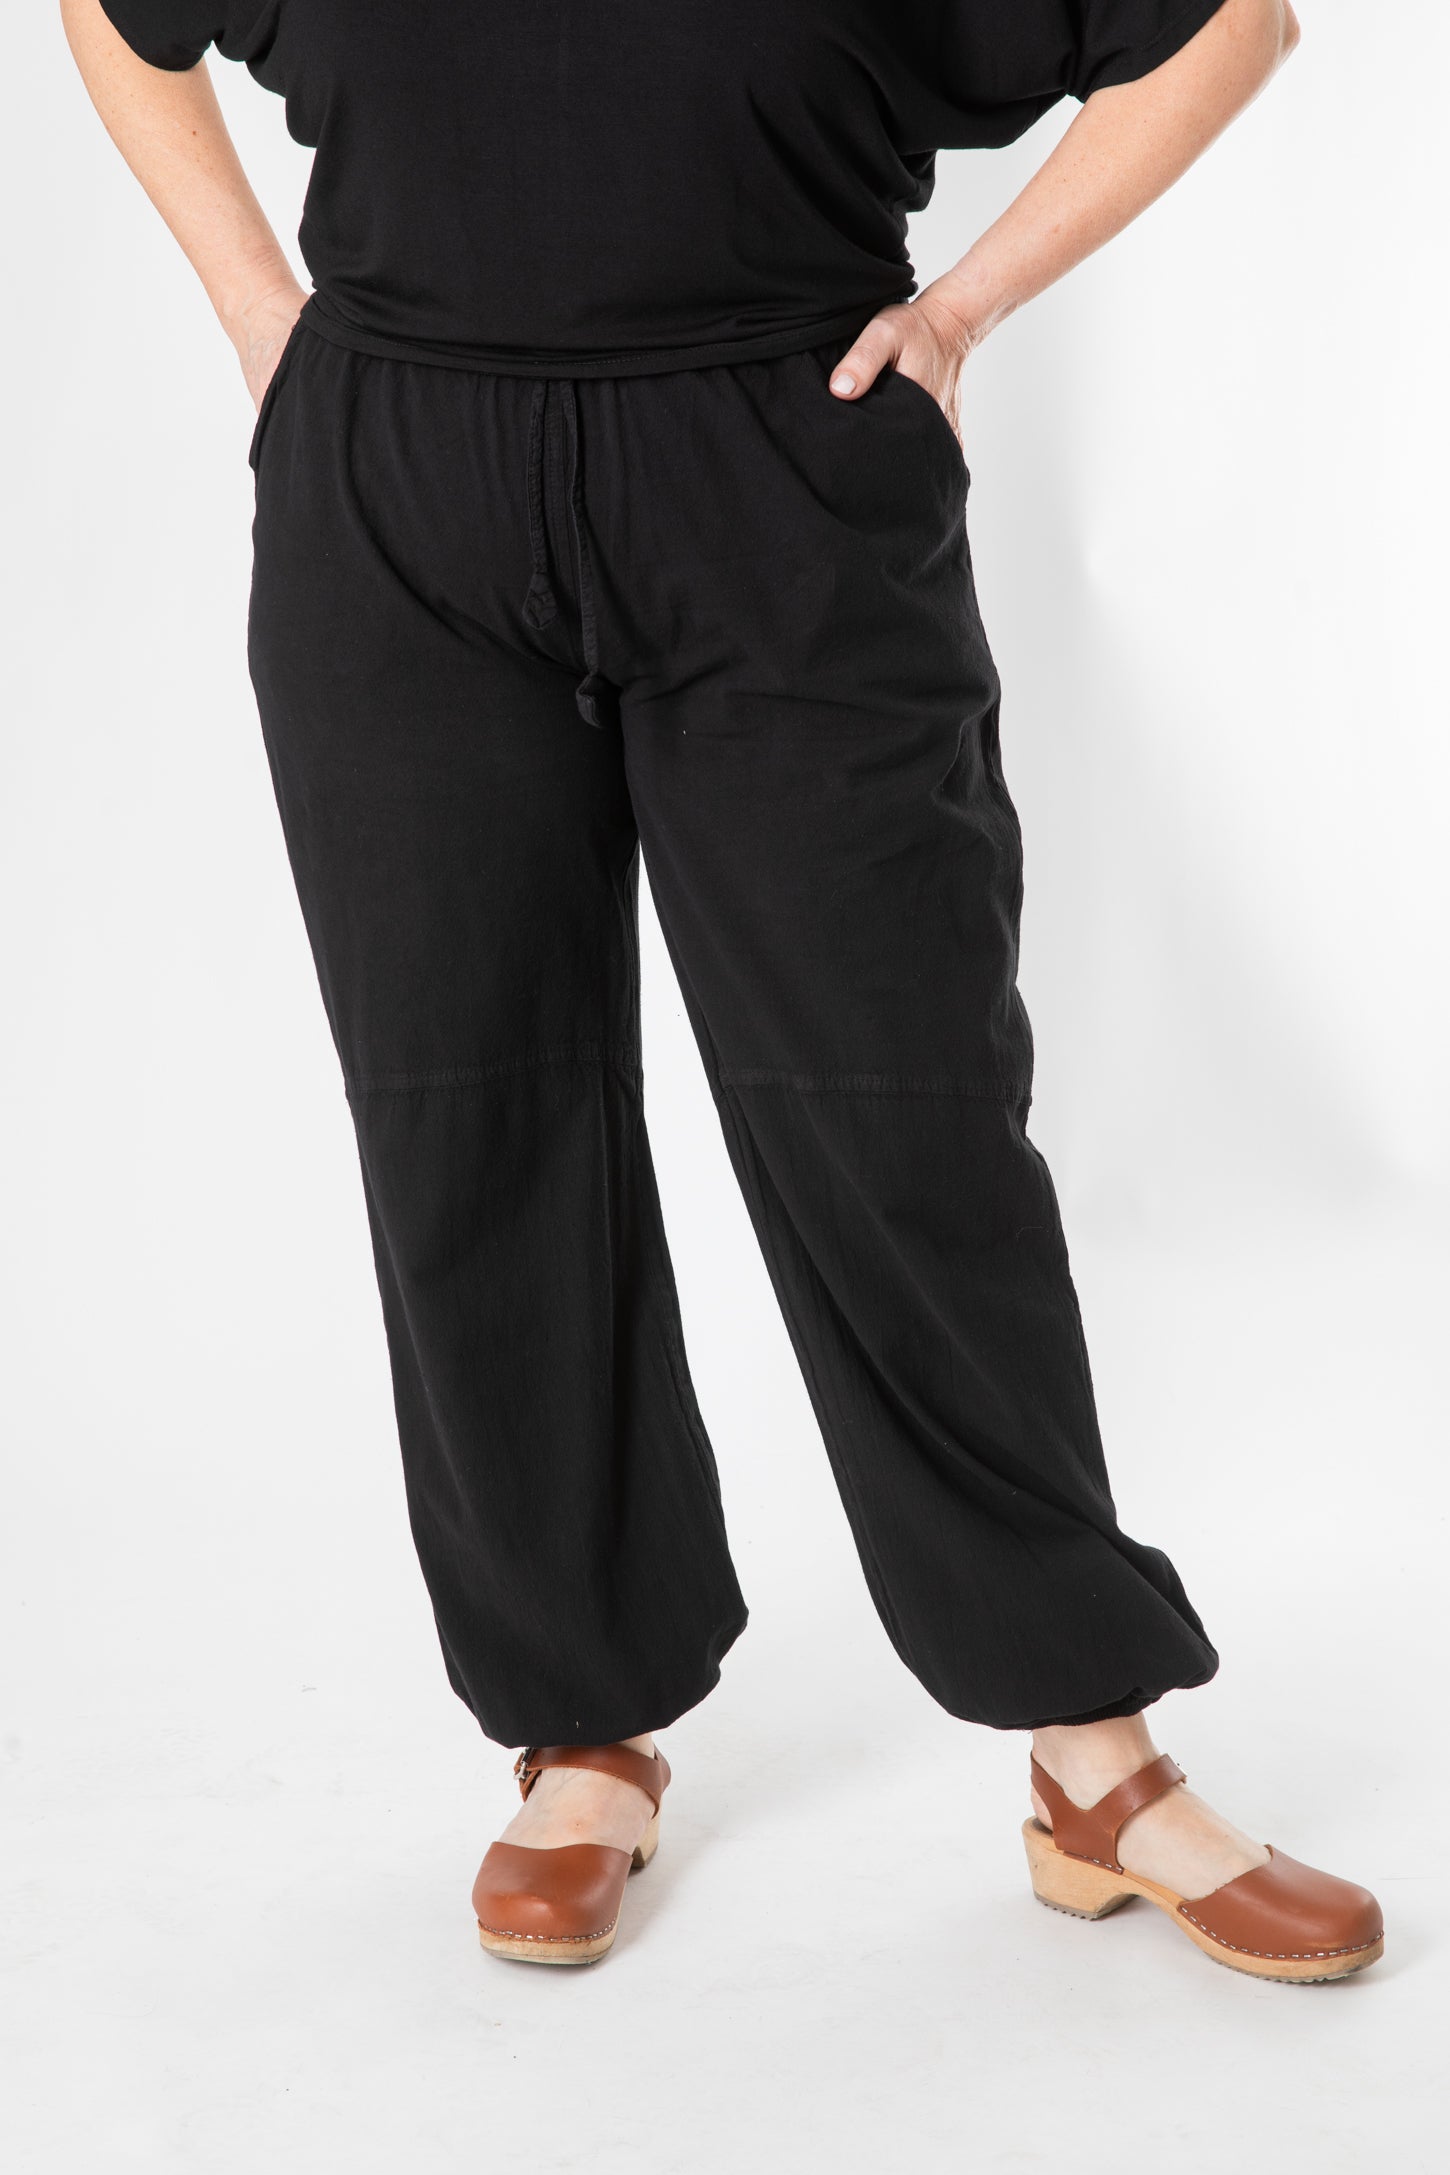 TULIO Fashion | Della Pants - Black | 100% Cotton